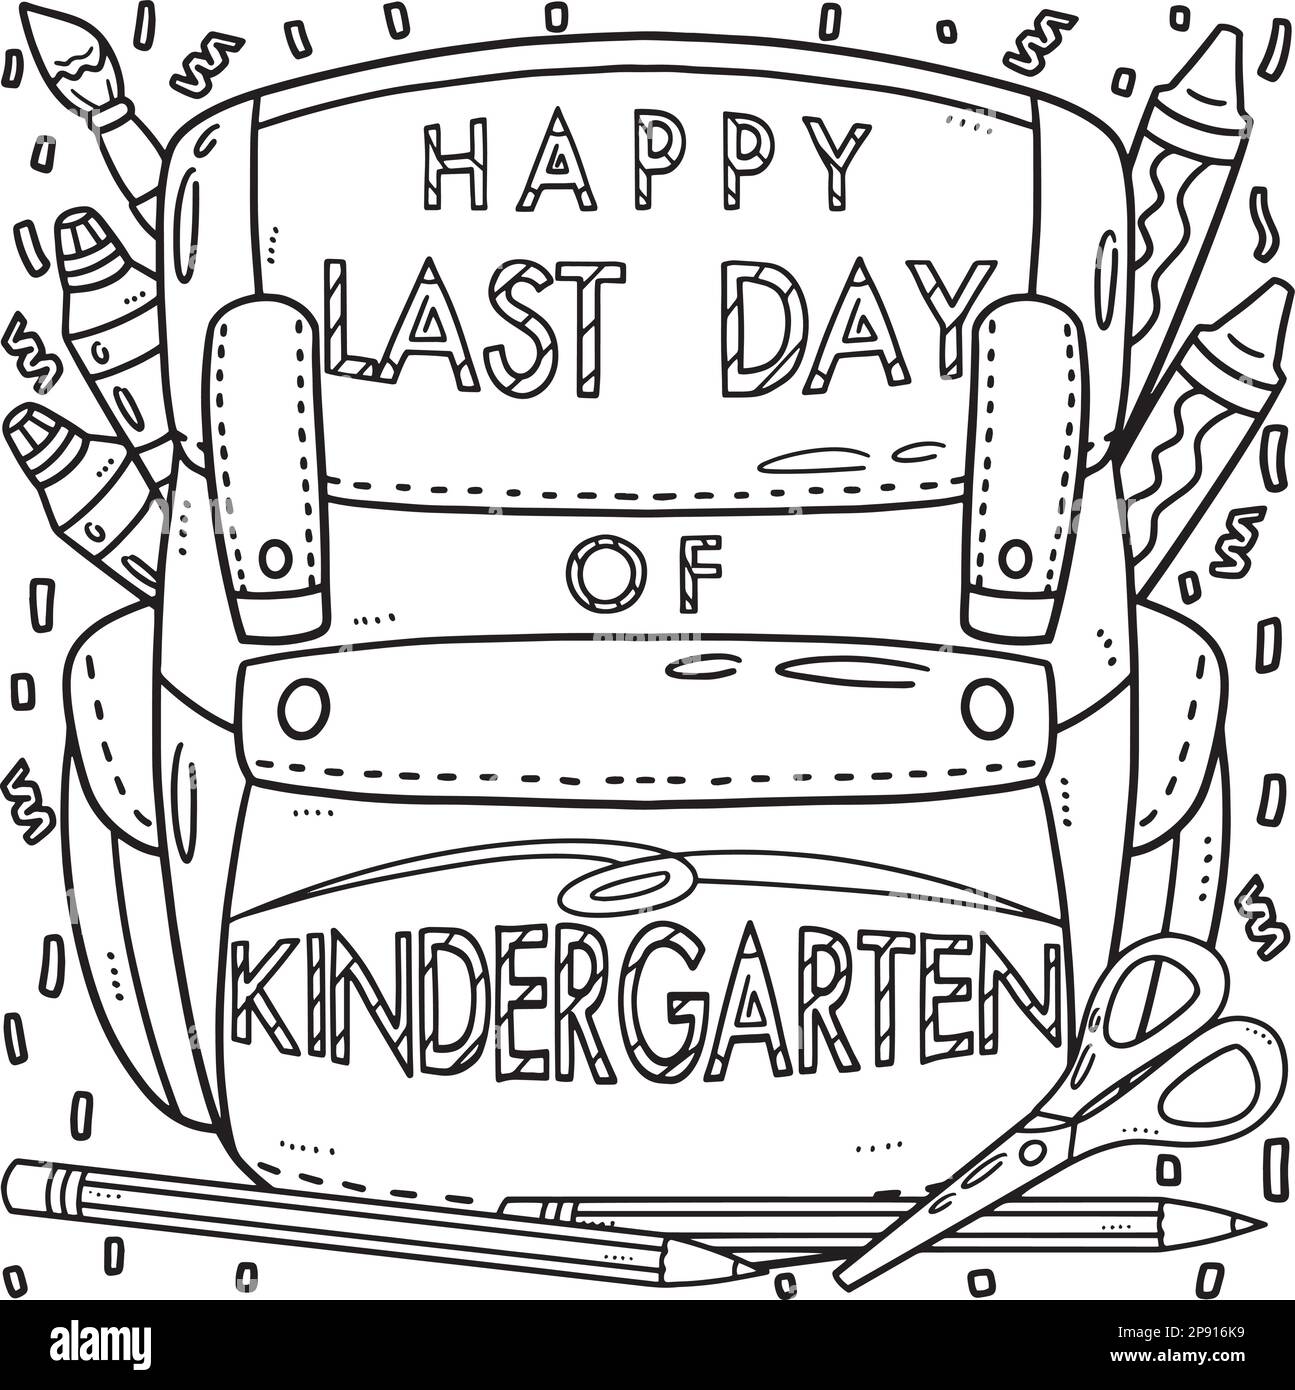 happy-last-day-of-kindergarten-coloring-page-stock-vector-image-art-alamy